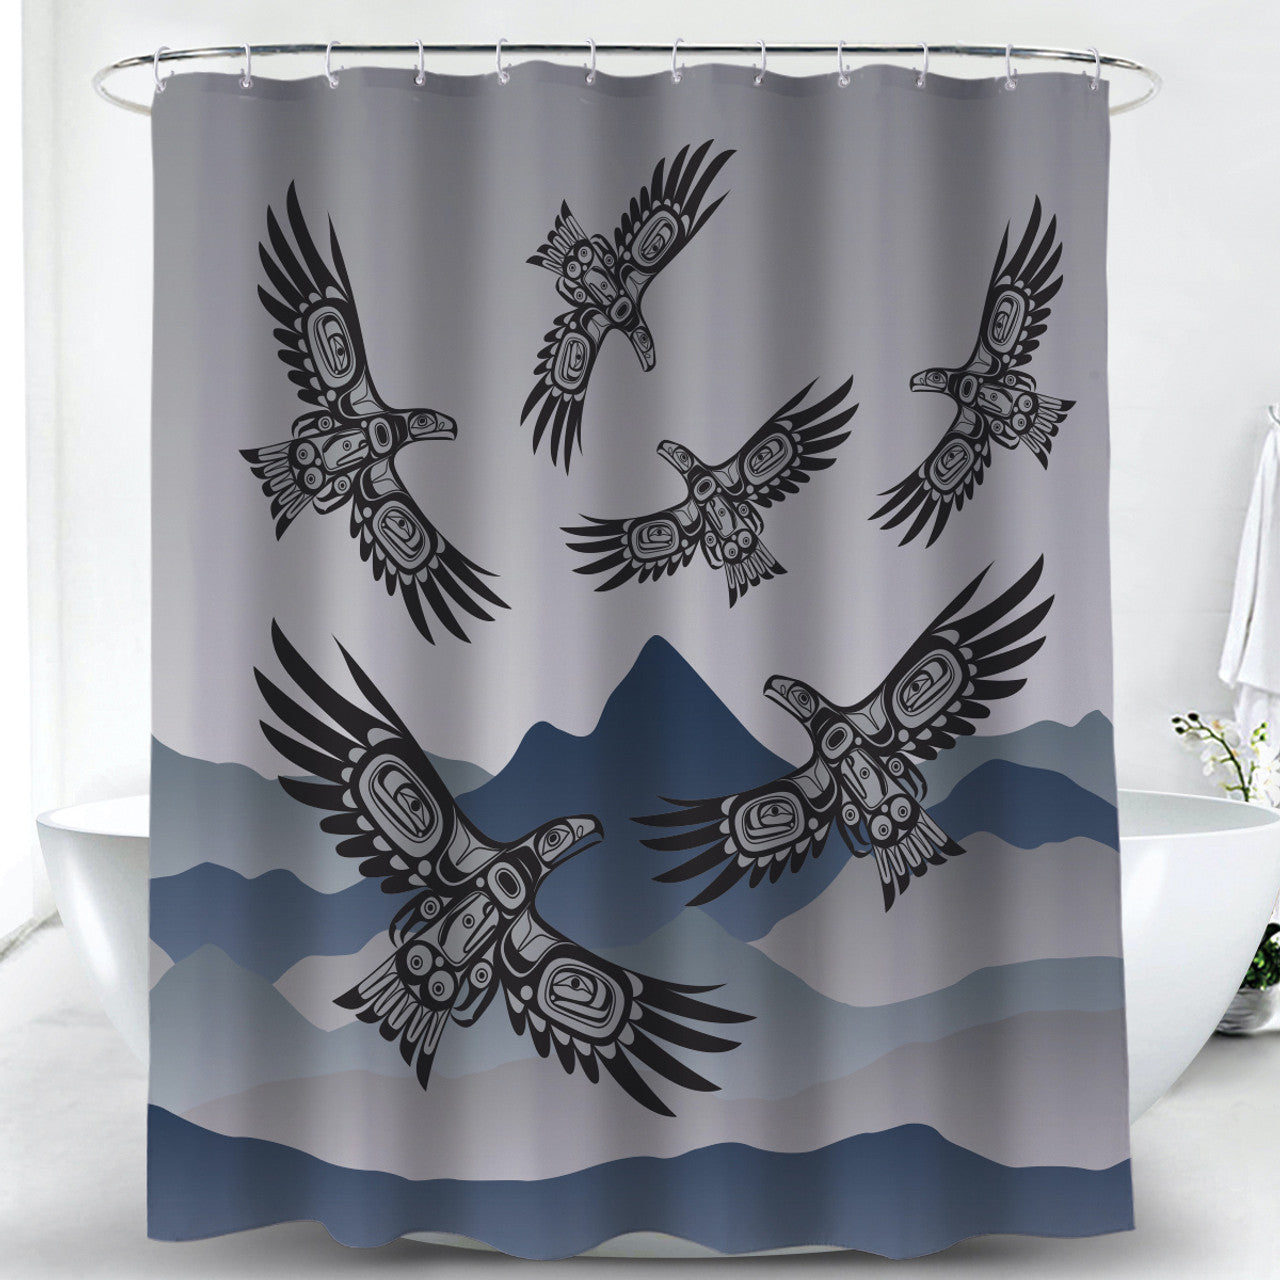 Shower Curtain- Soaring Eagle by Corey Bulpitt